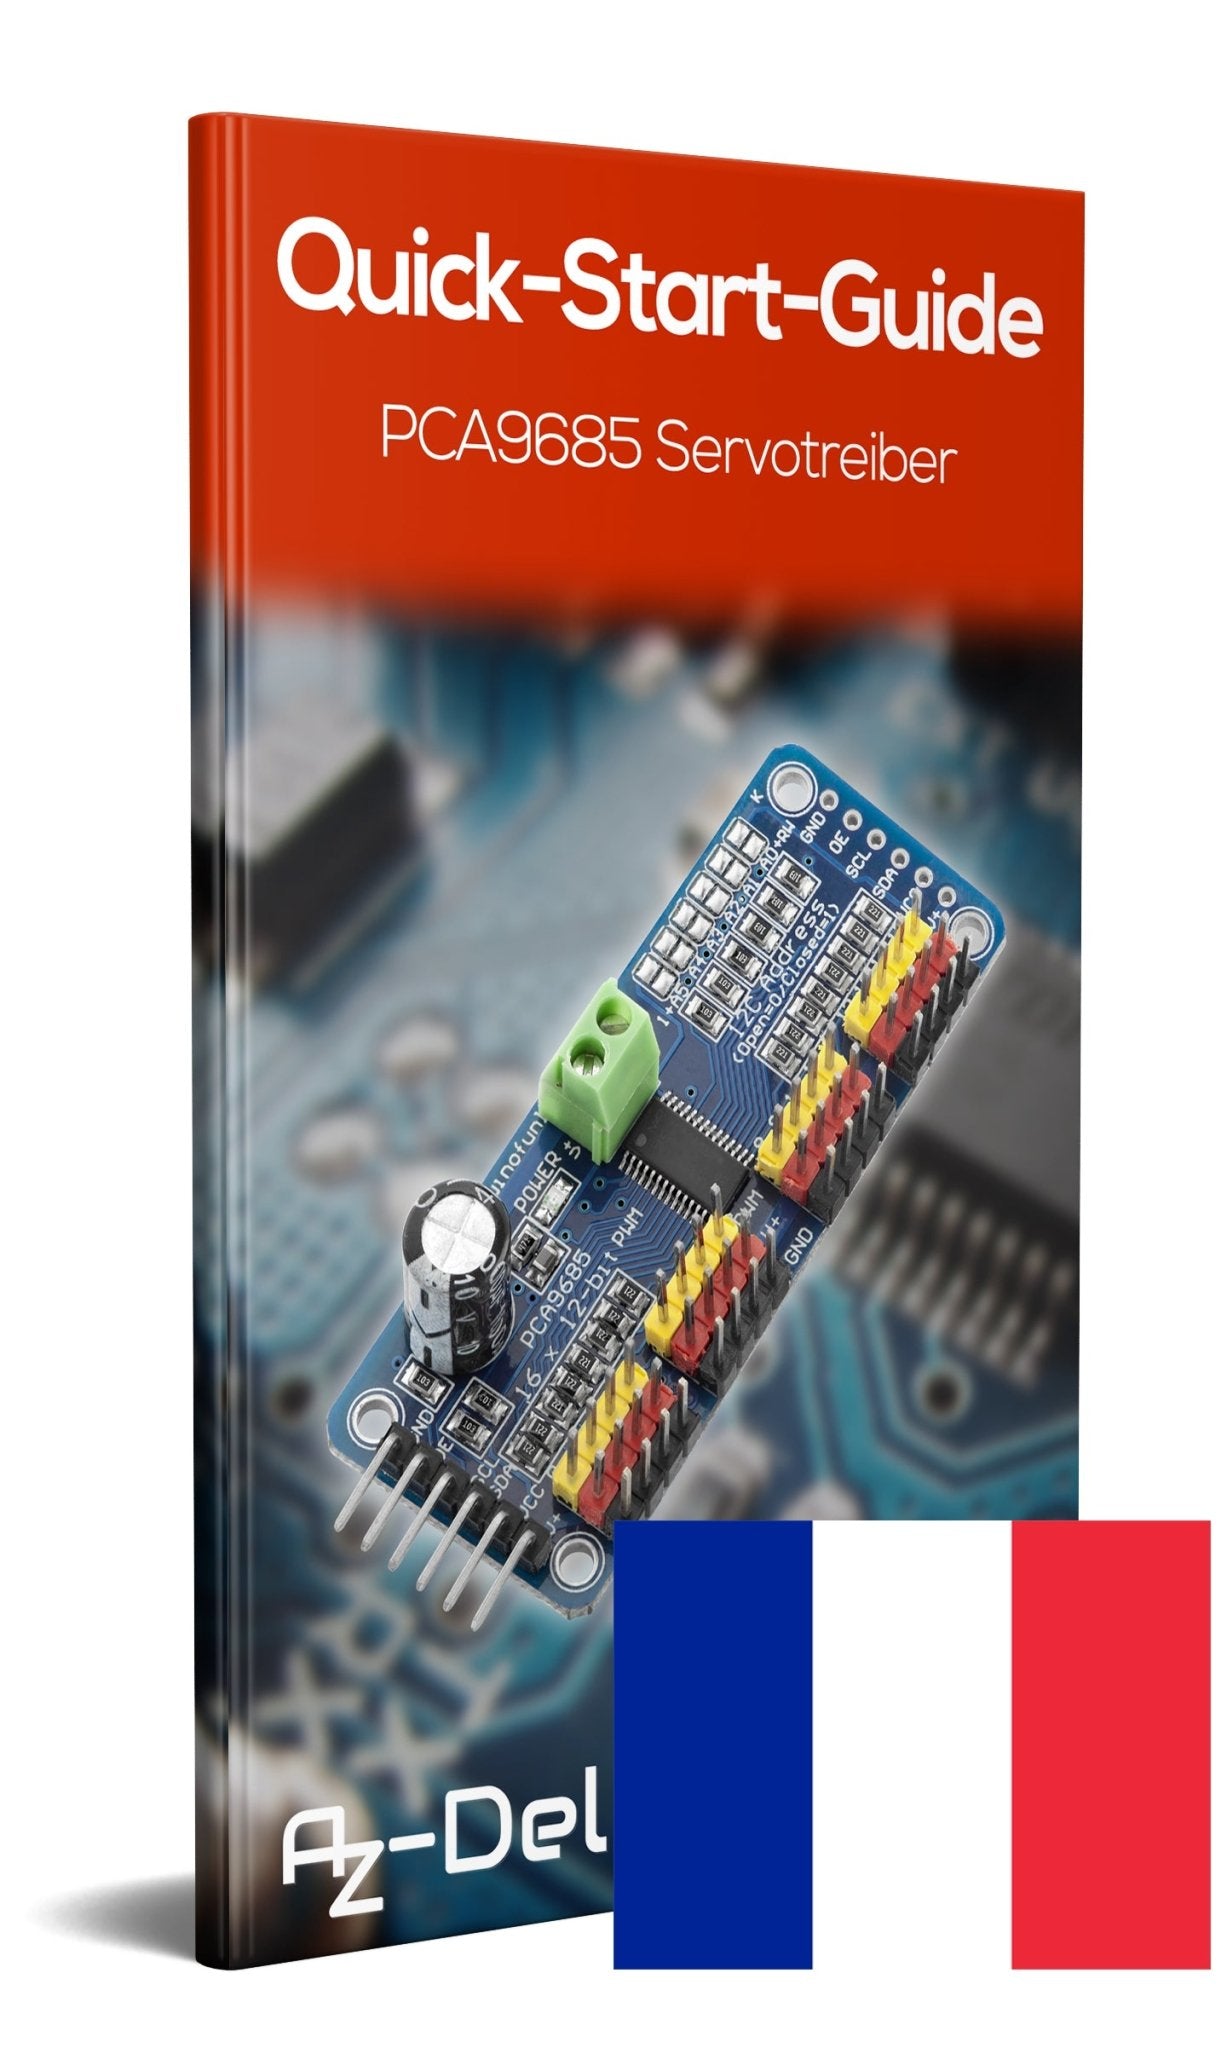 PCA9685 16 Kanal 12 Bit PWM Servotreiber für Raspberry Pi - AZ-Delivery